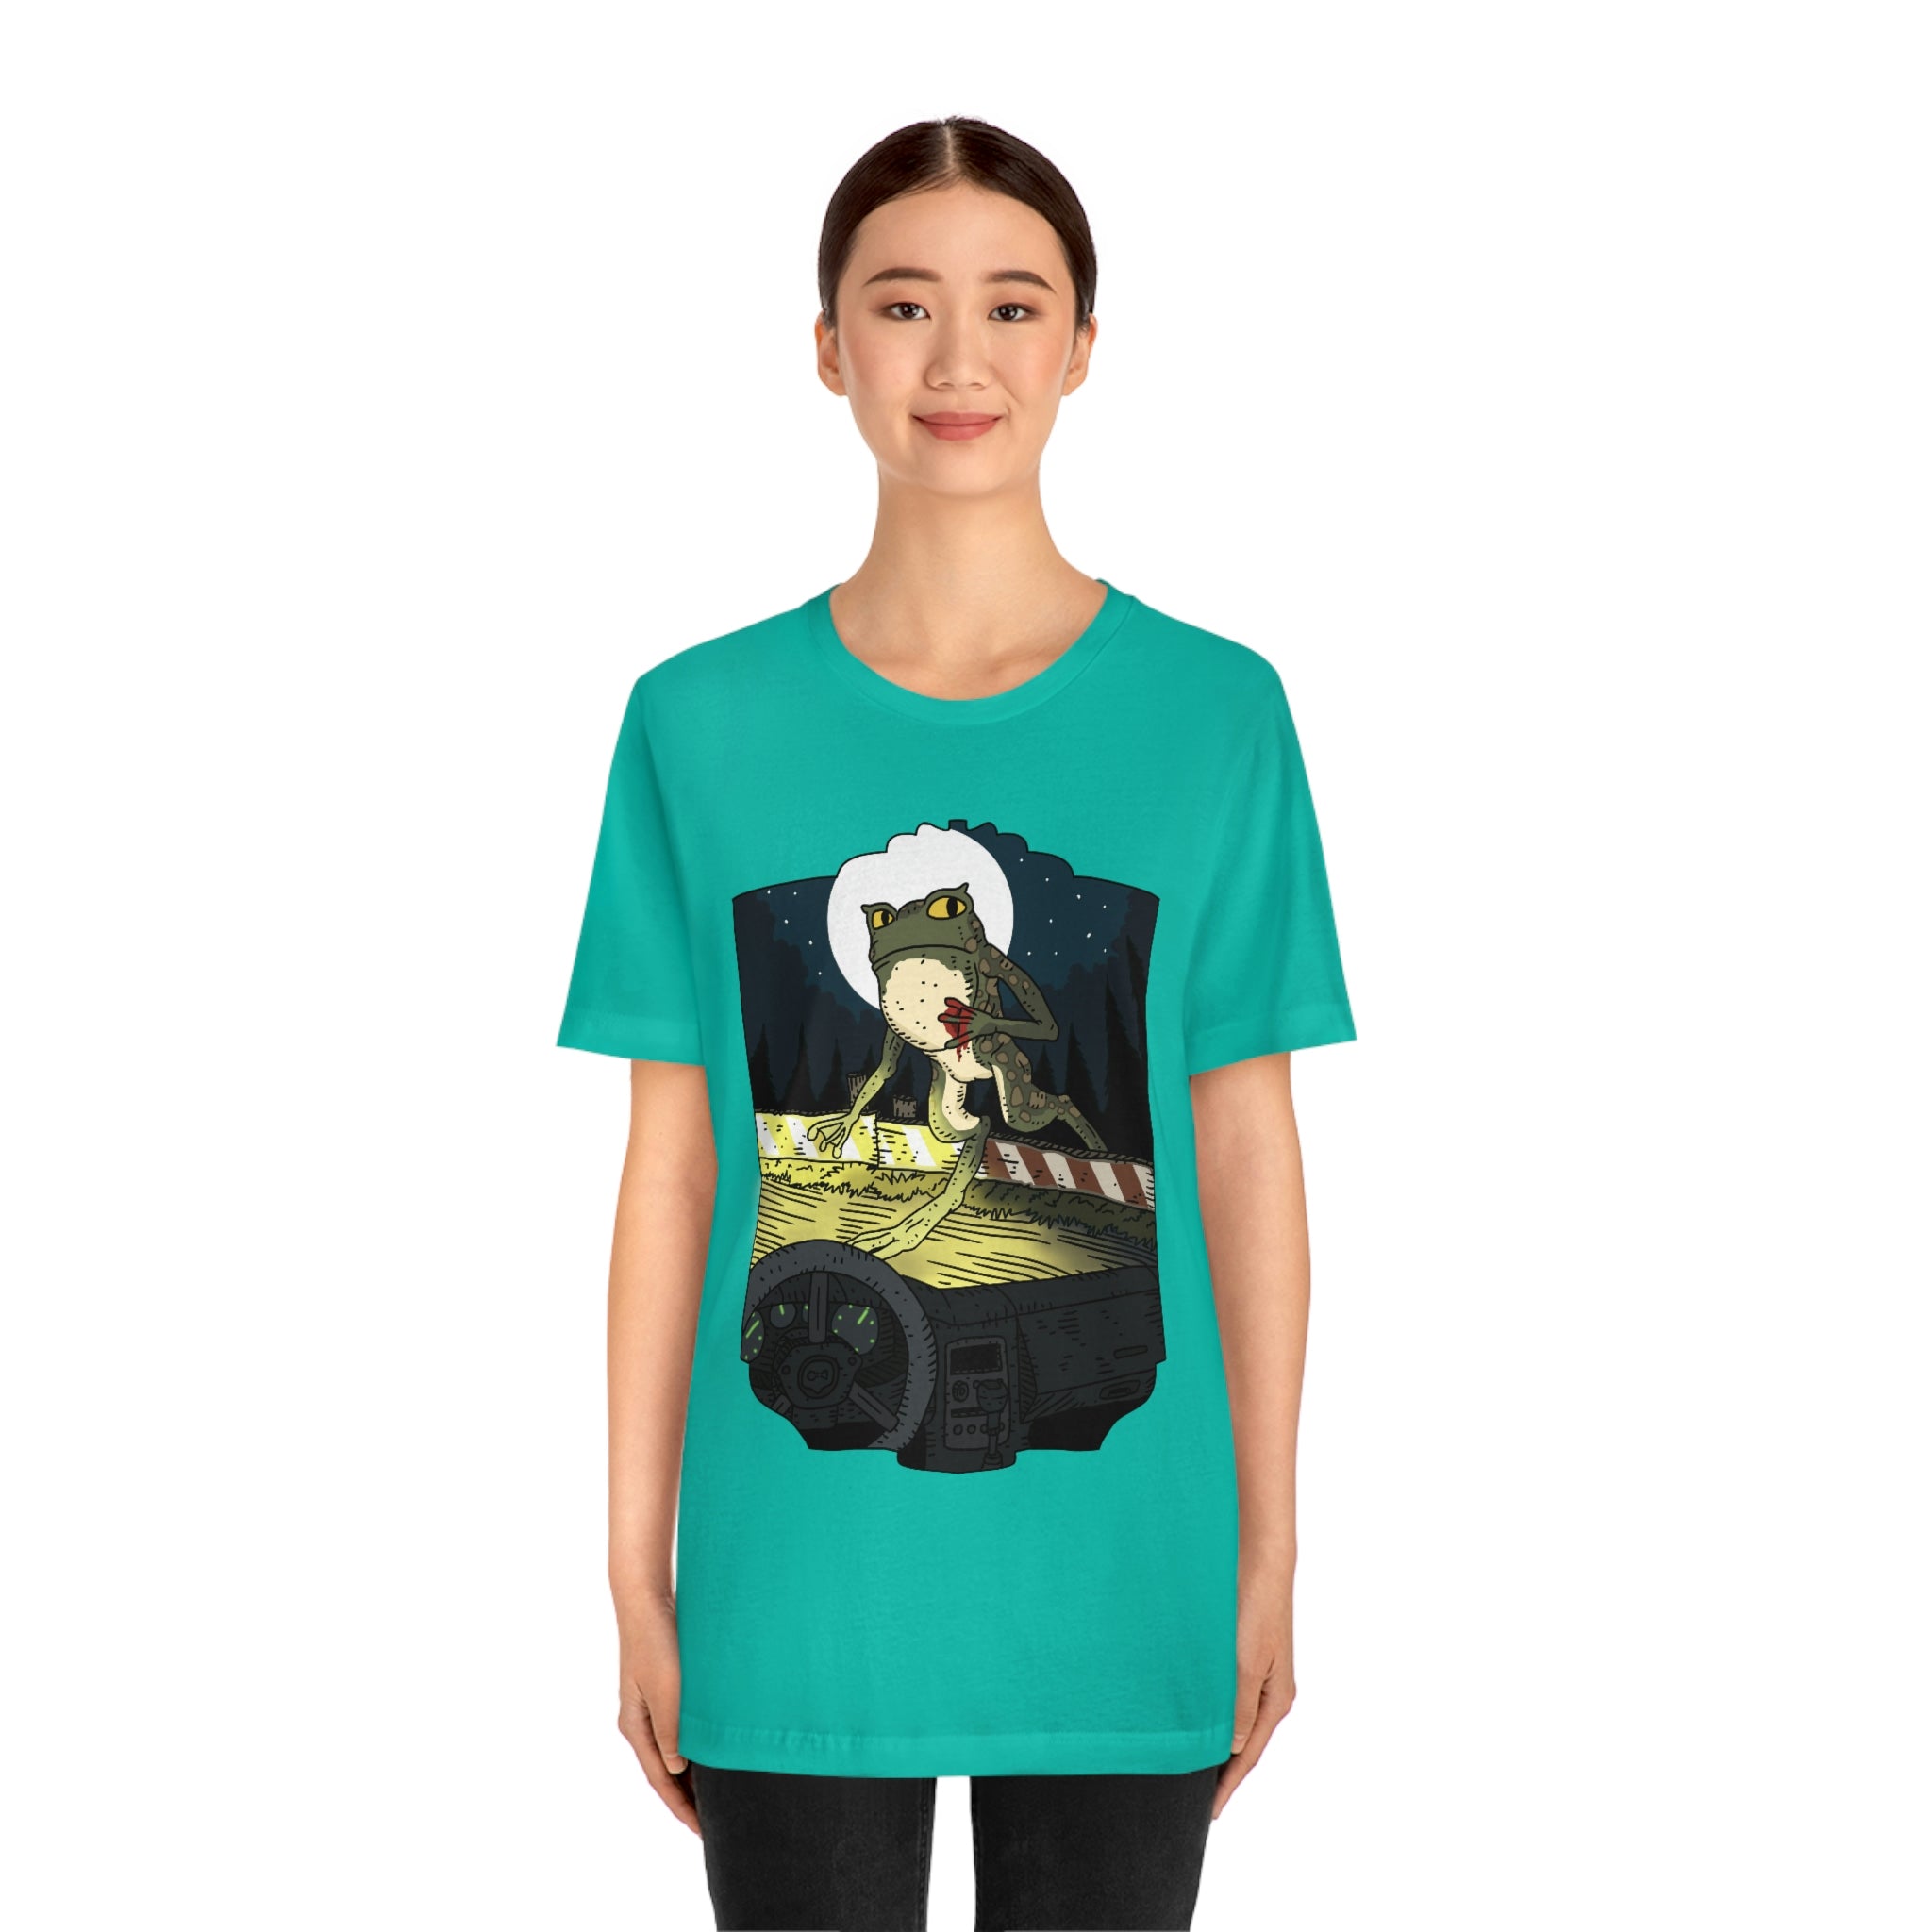 Loveland Frogman Of Ohio T-Shirt